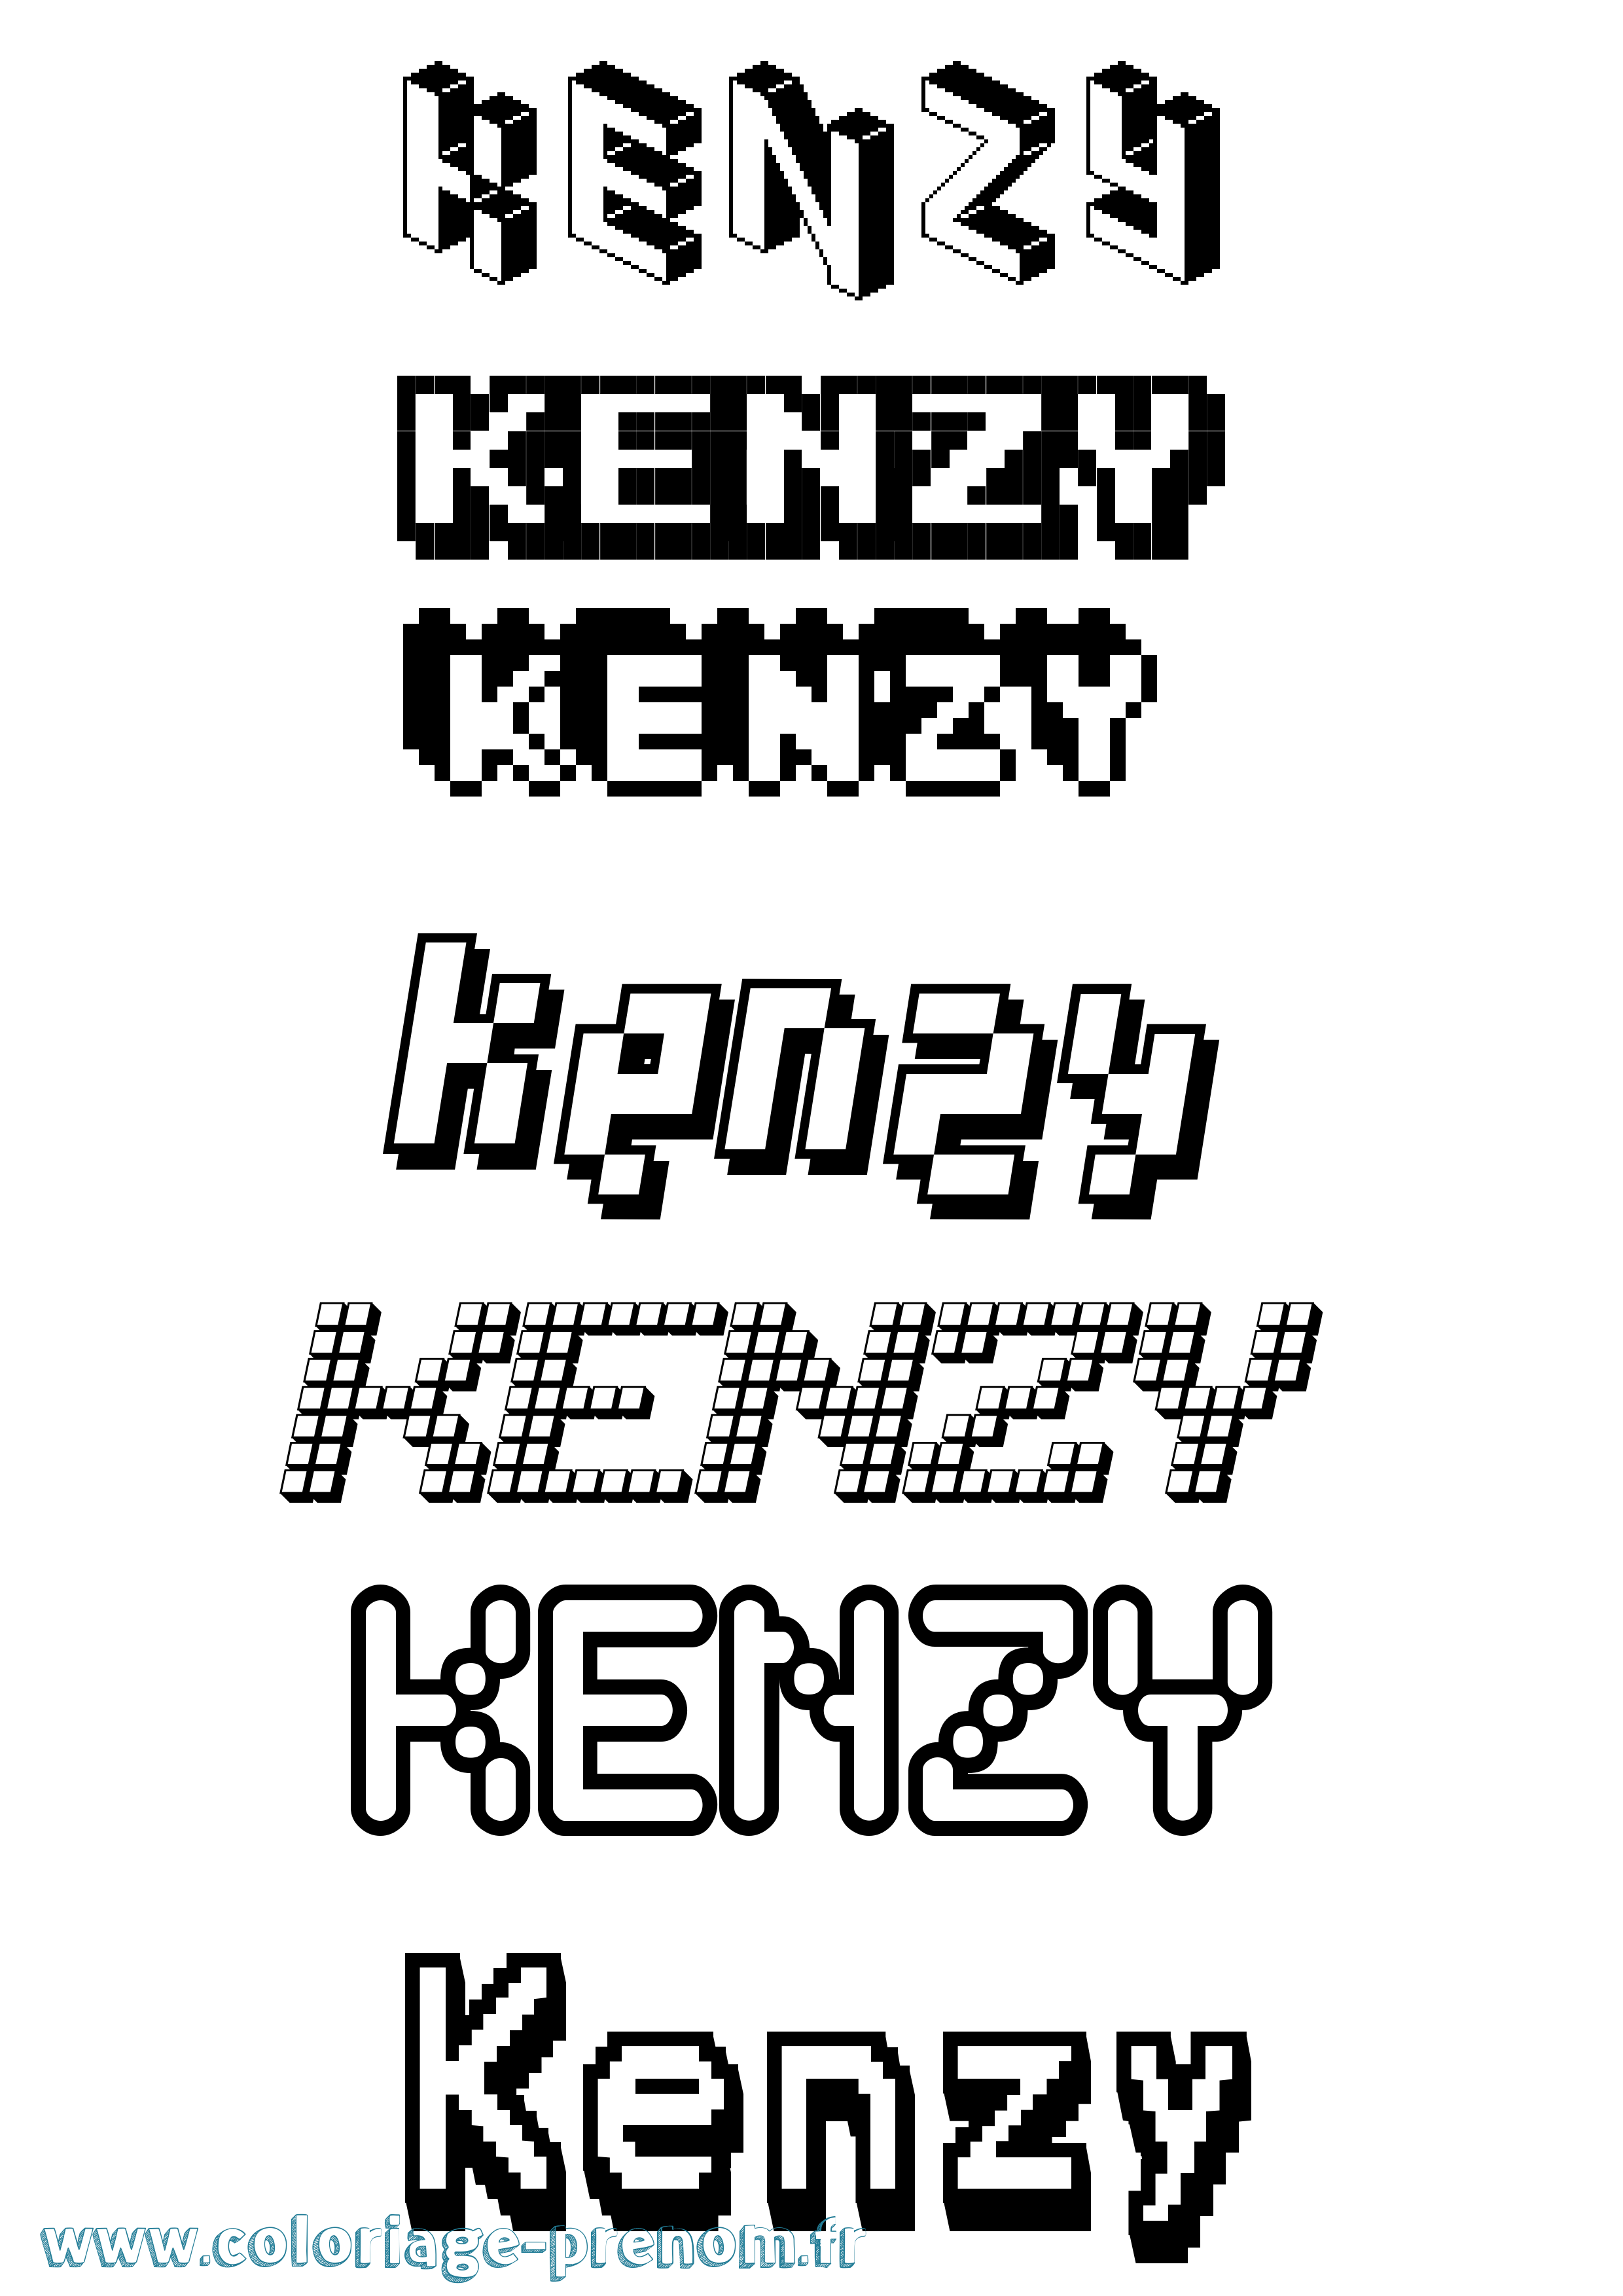 Coloriage prénom Kenzy